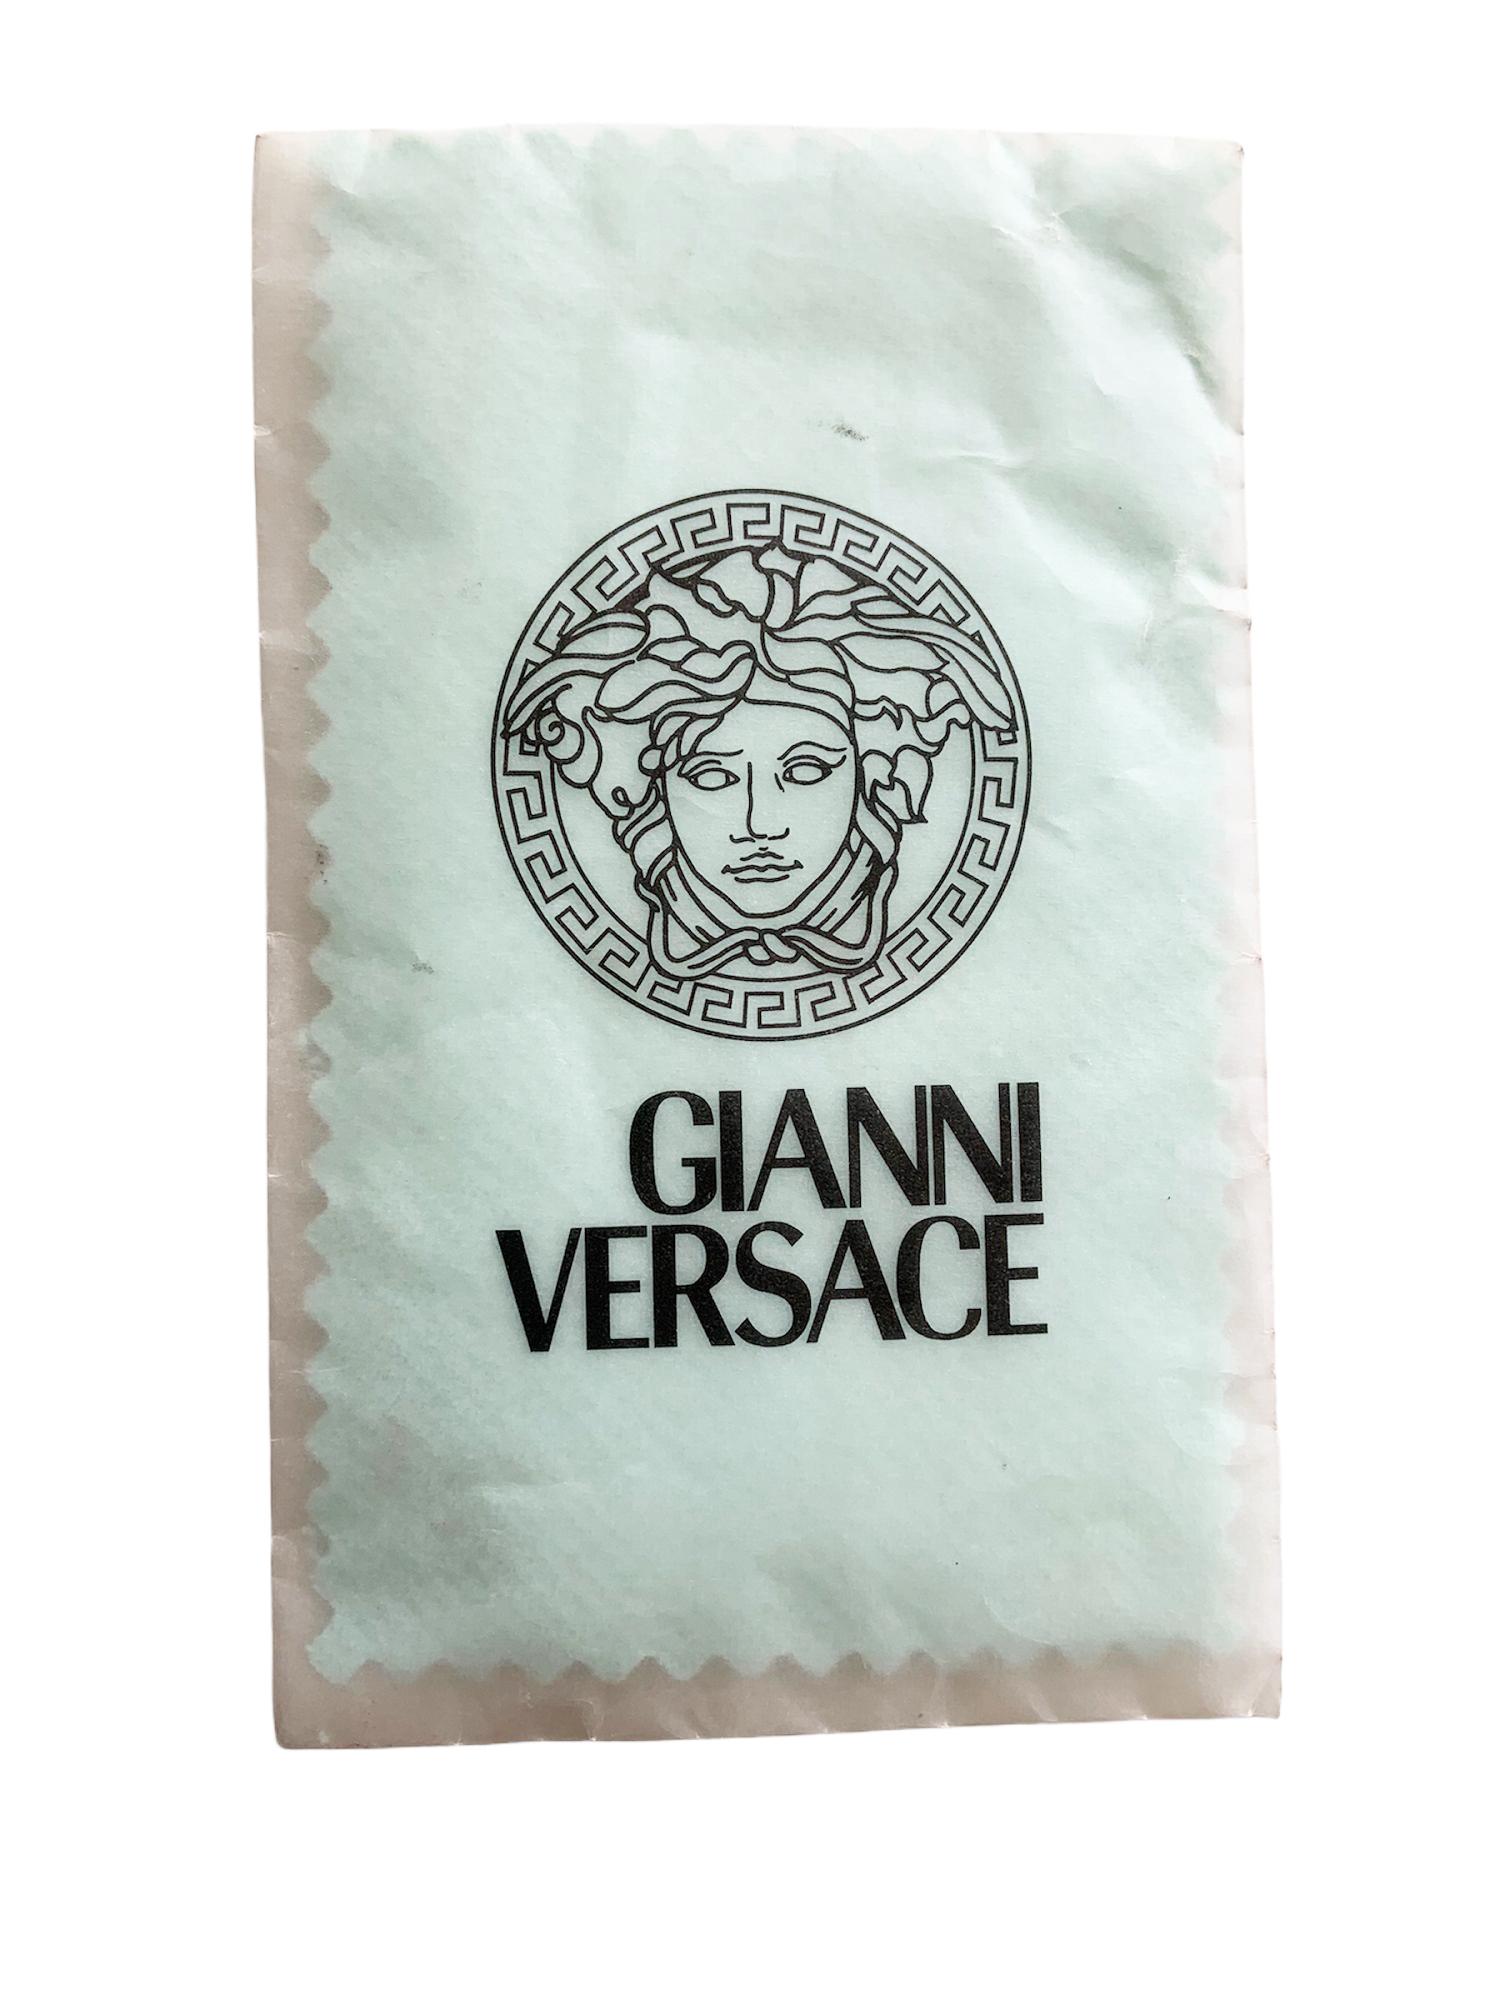 Vintage Gianni Versace S/S 1991 Matching Jeweled 3 pc Set - Bag + Belt + Shoes 7